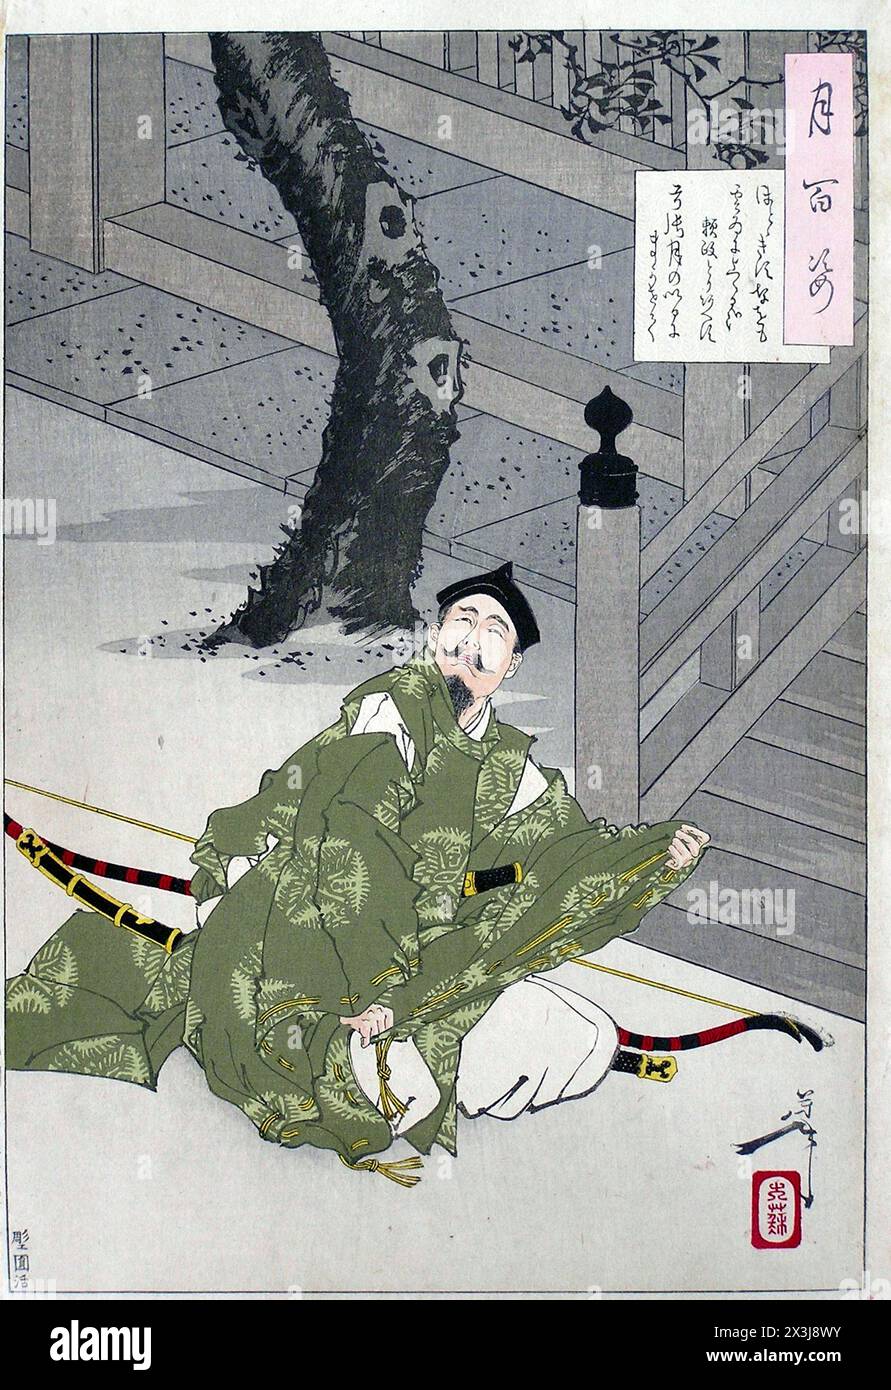 Tsukioka Yoshitoshi Holzschnitt aus der Serie „One Hundred Aspects of the Moon“, 1885-1882 - Japanische Zeichnung Illustration Stockfoto